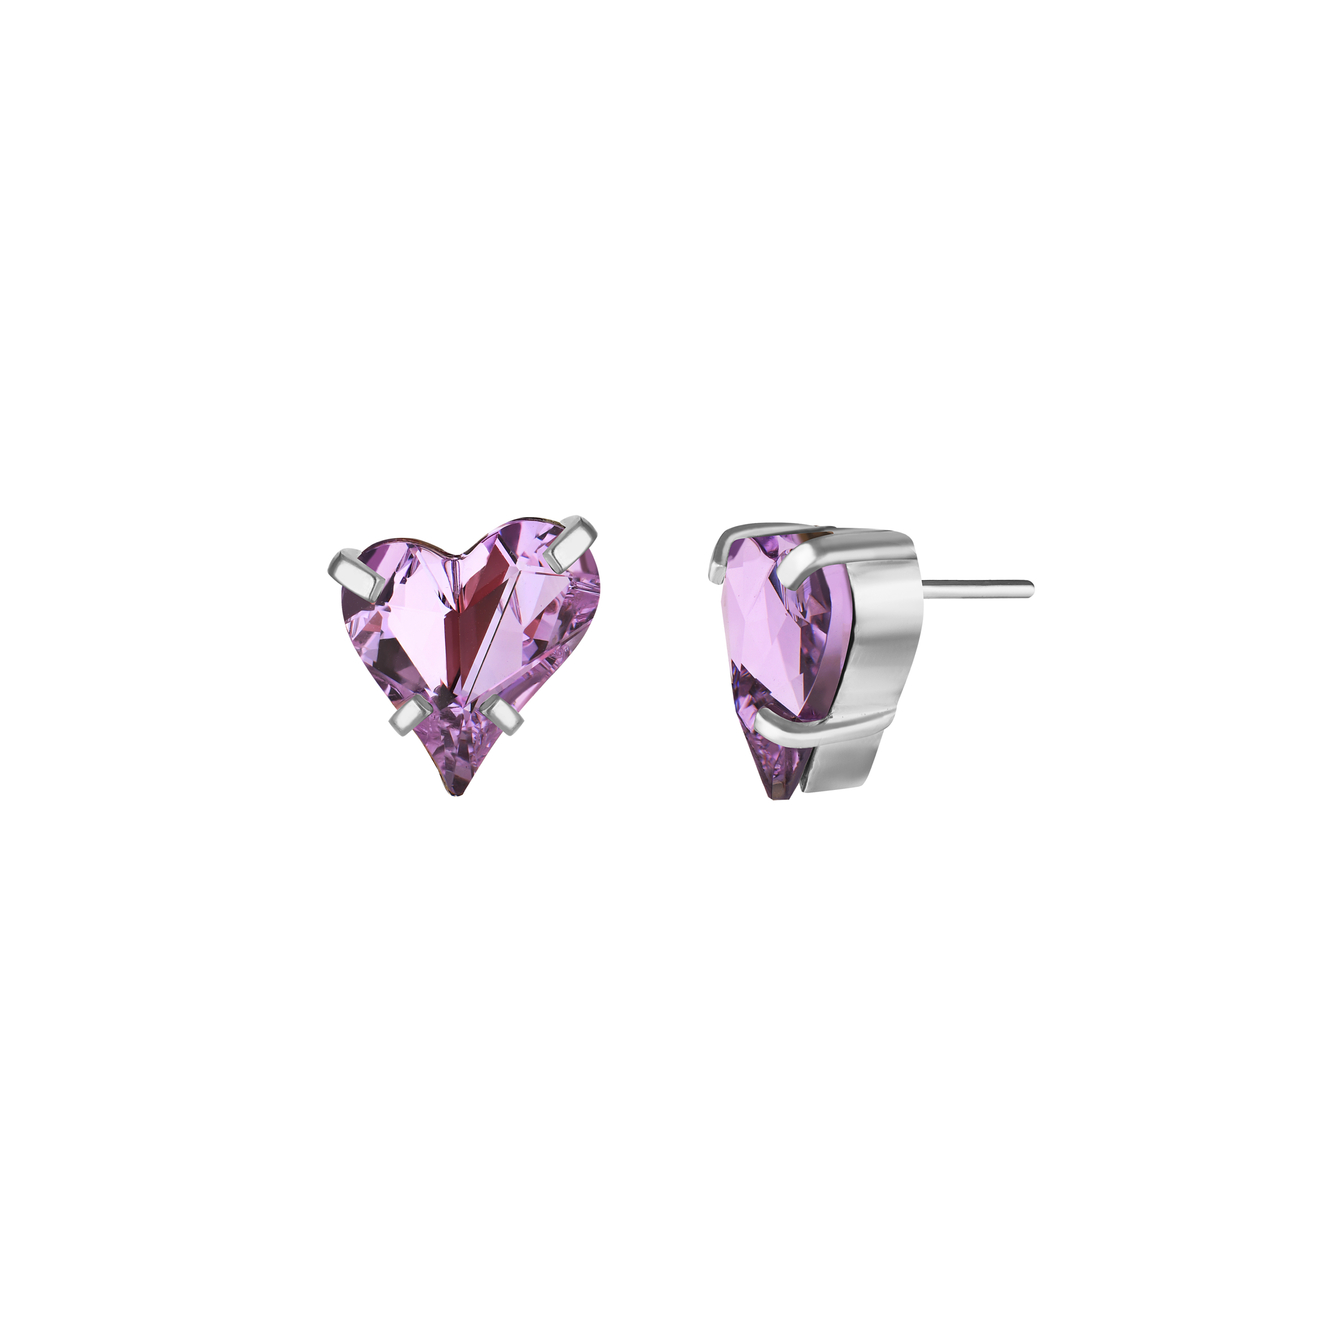 Phenomenal Studio Серьги-сердца Love.Violet Earrings с кристаллами